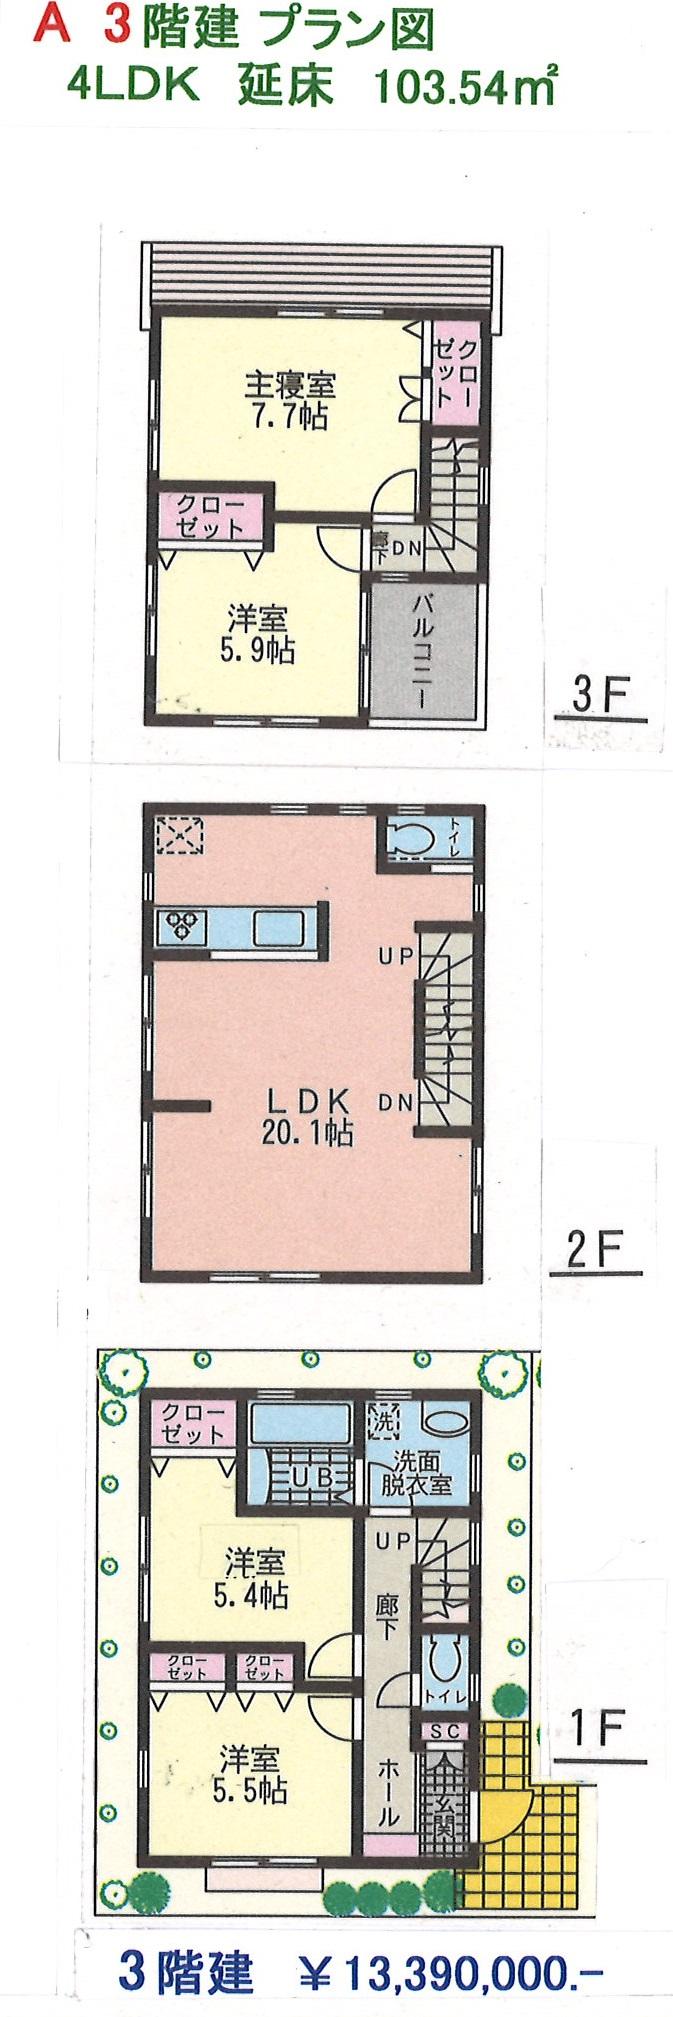 Building plan example (floor plan). Building plan example (A section) 4LDK, Land price 31,800,000 yen, Land area 84.56 sq m , Building price 13,390,000 yen, Building area 103.54 sq m